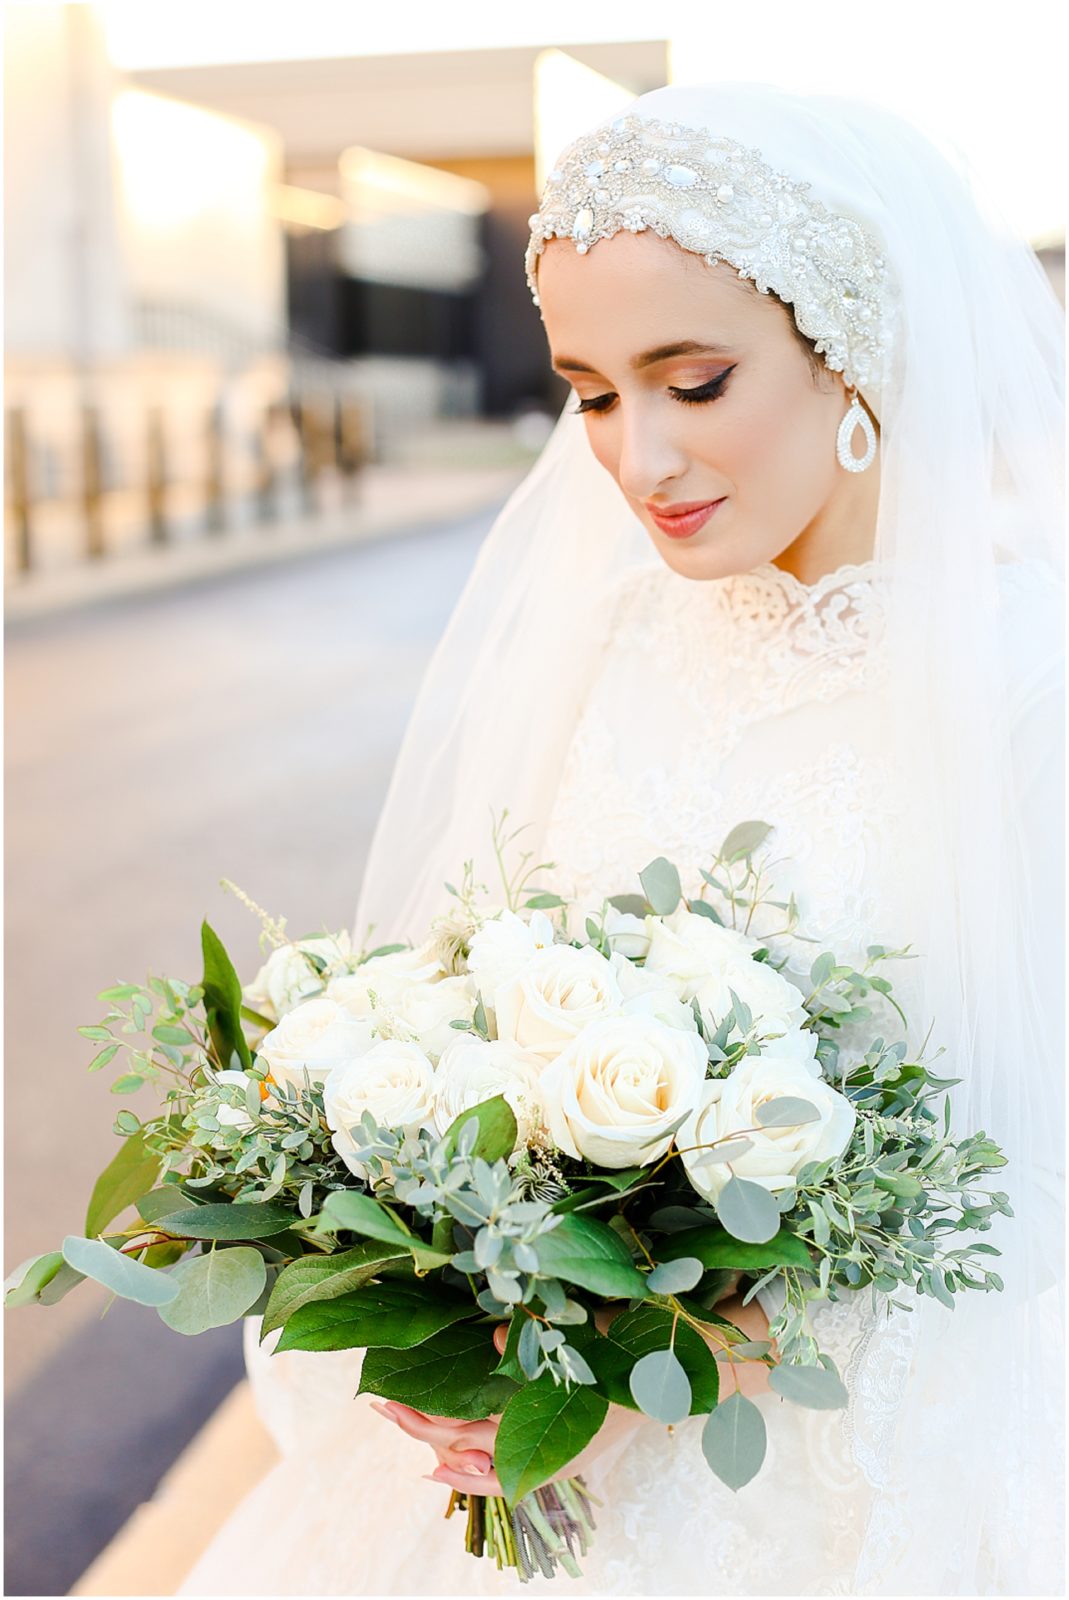 hijabi bride - muslim wedding - photos at st louis art museum - stl wedding photographer - arab wedding photos 